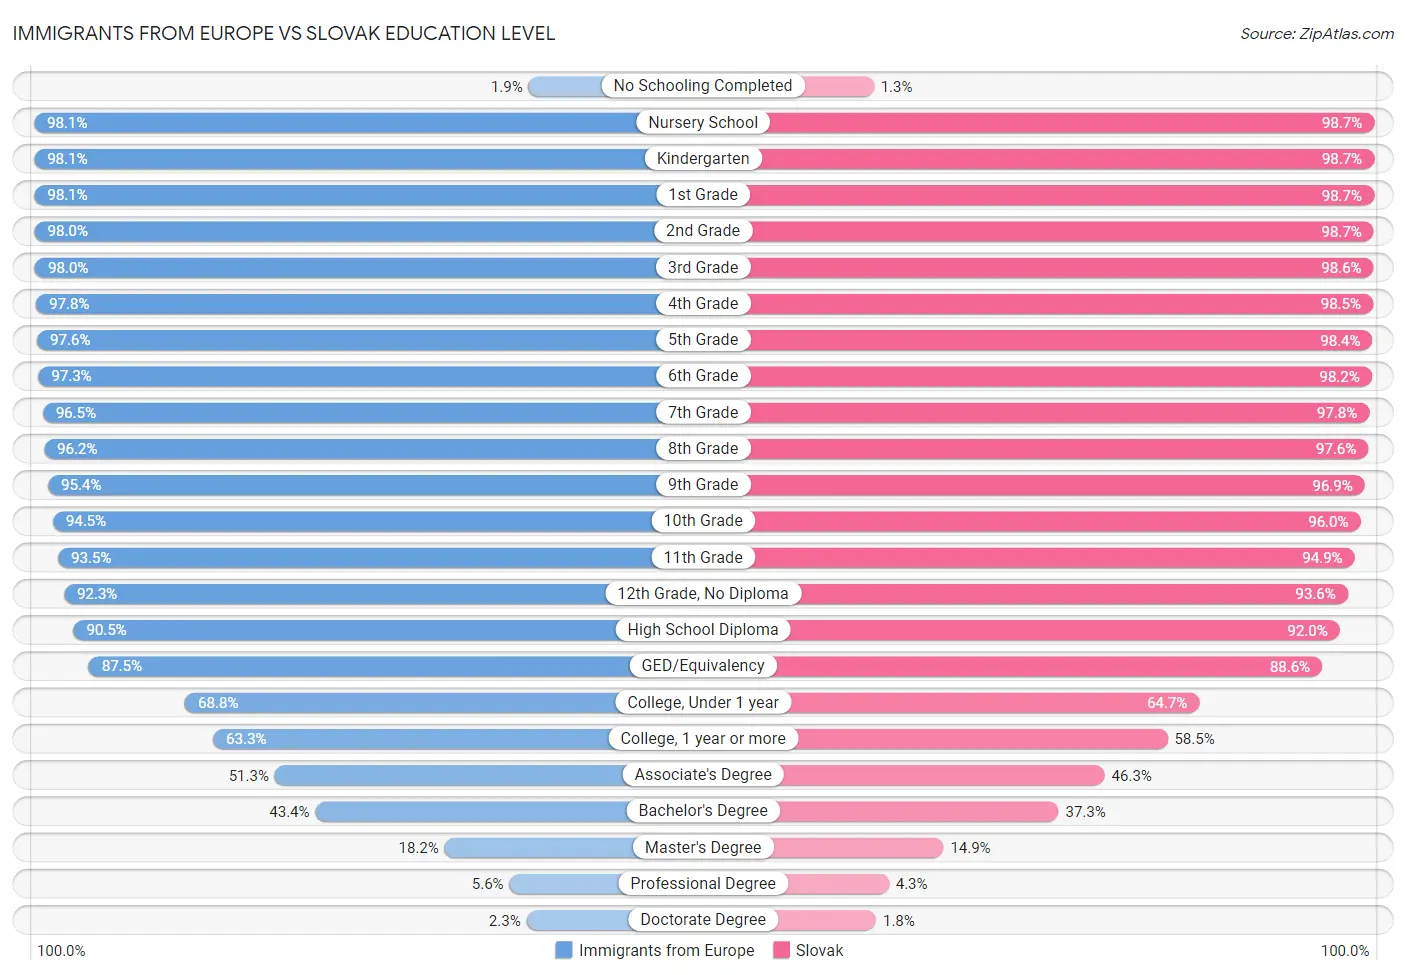 Immigrants from Europe vs Slovak Education Level